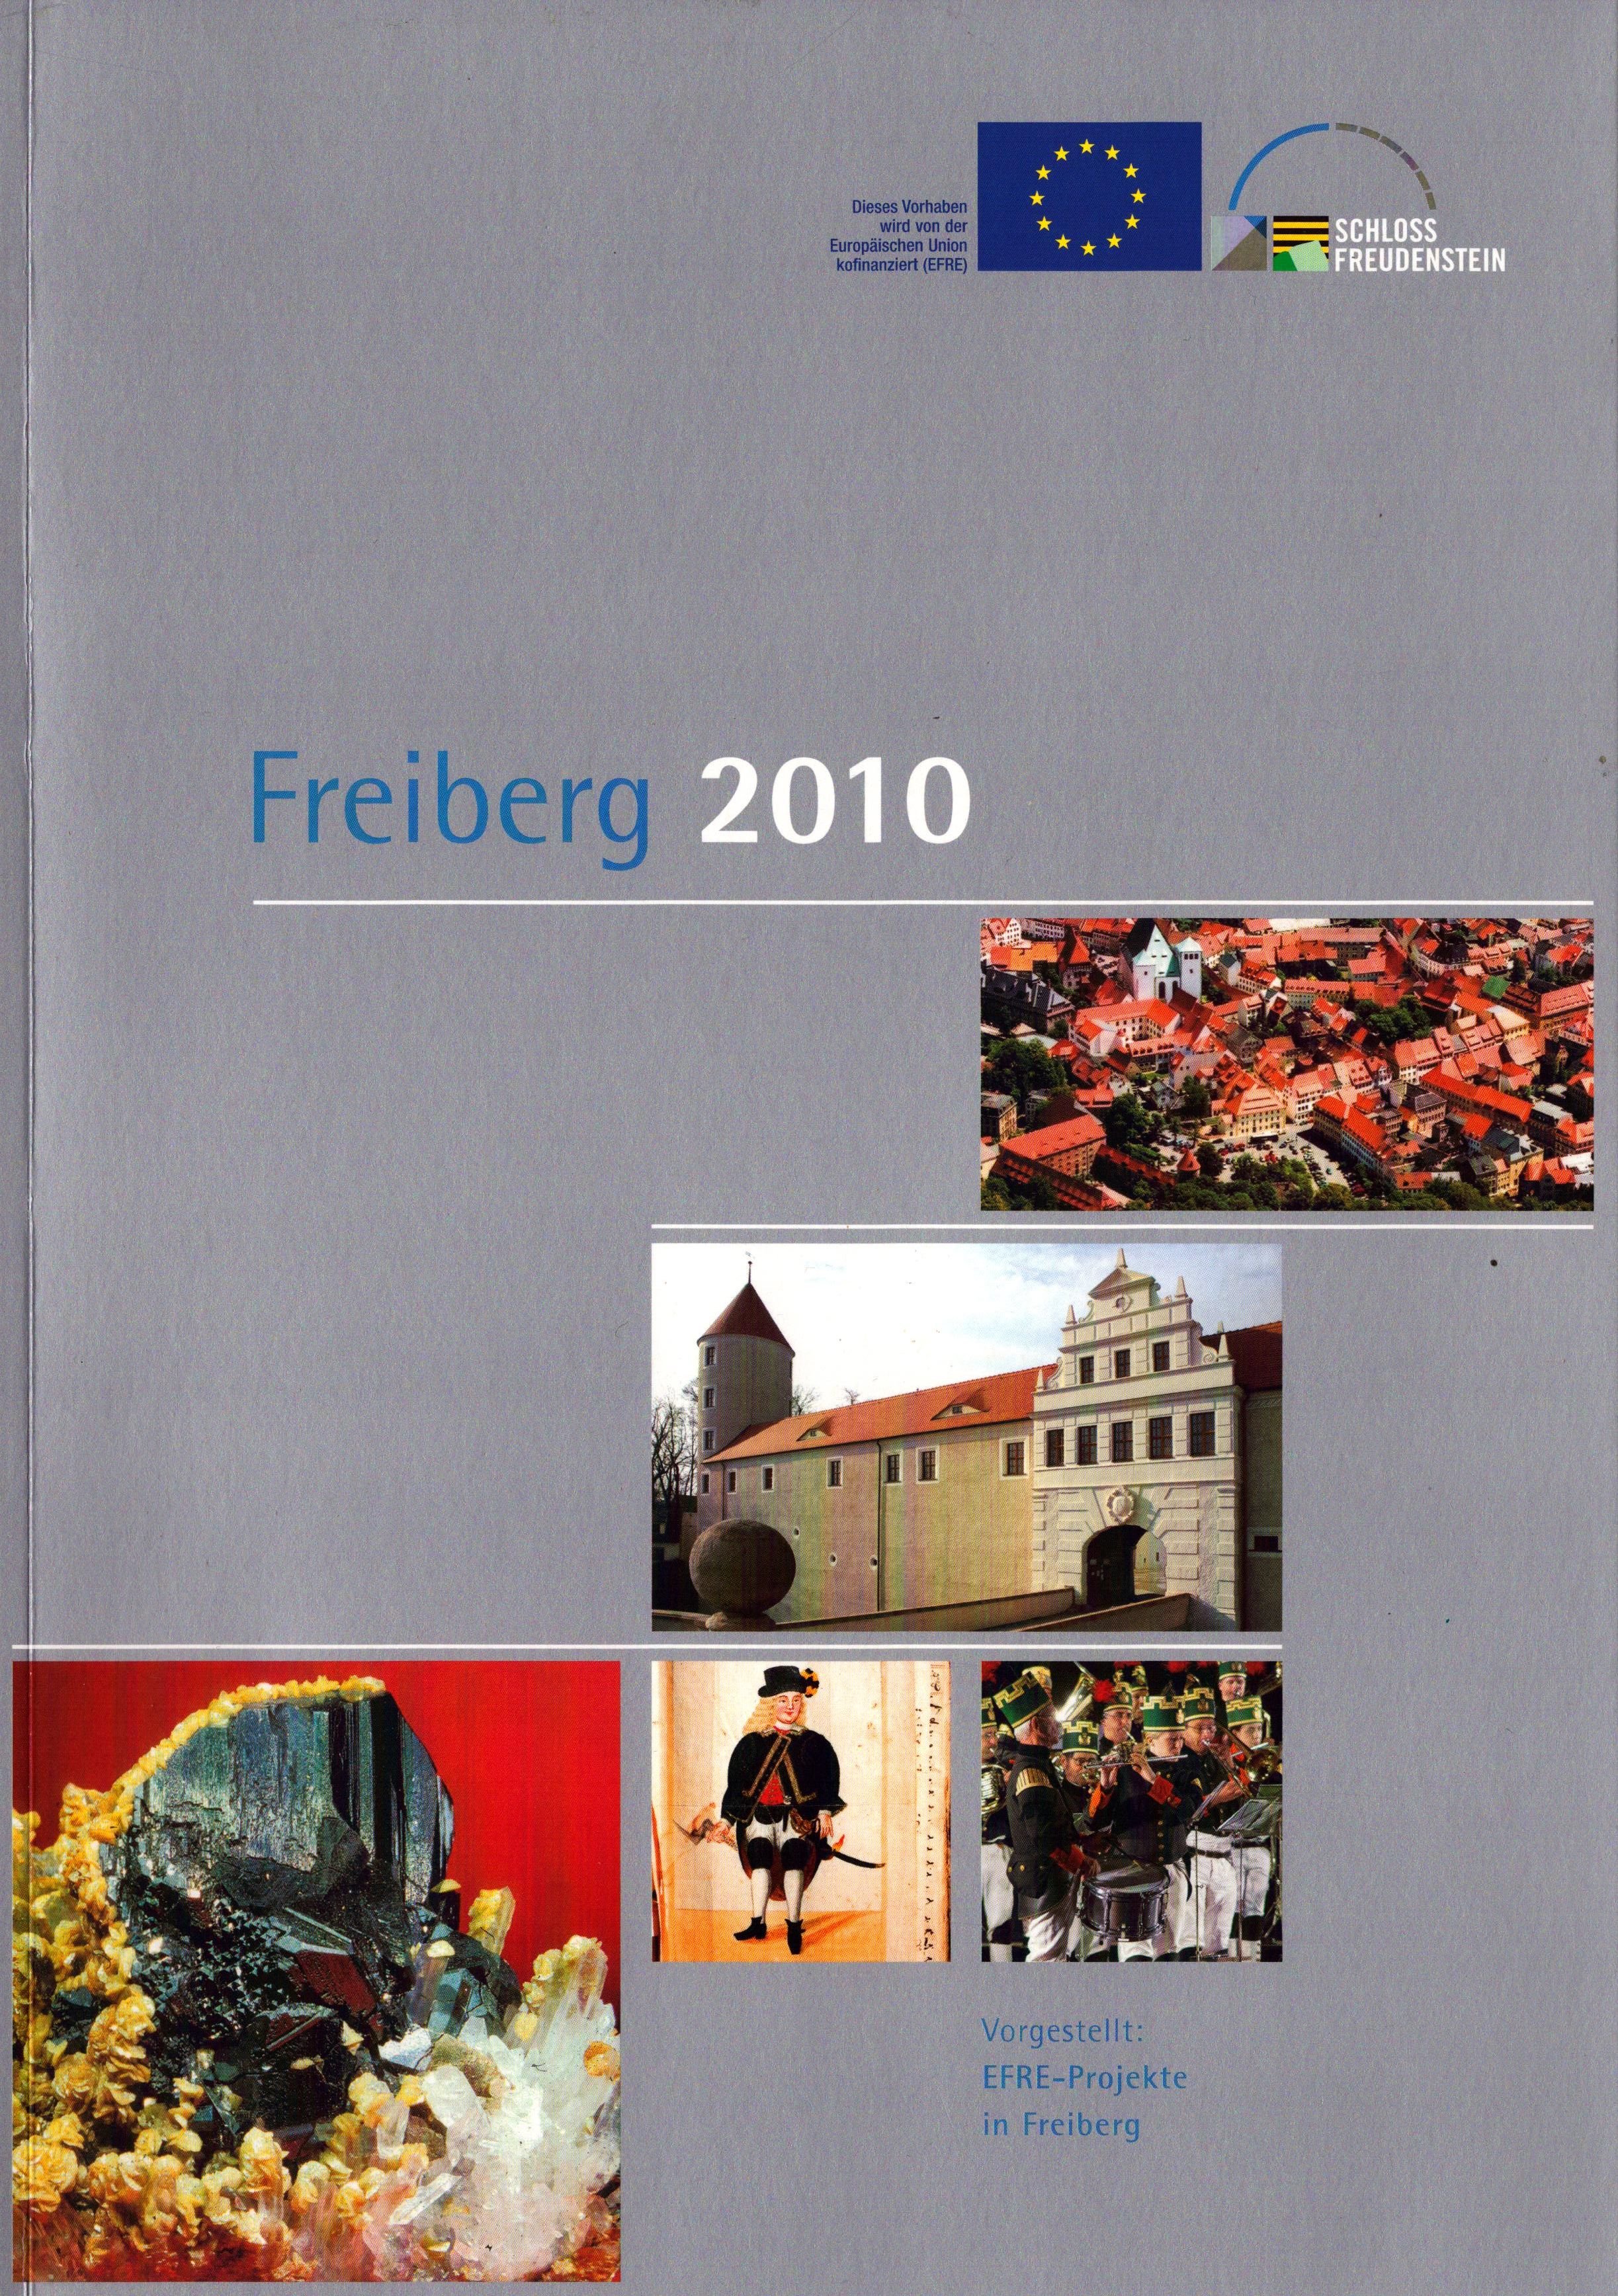 Freiberg 2010 (Archiv SAXONIA-FREIBERG-STIFTUNG CC BY-NC-SA)